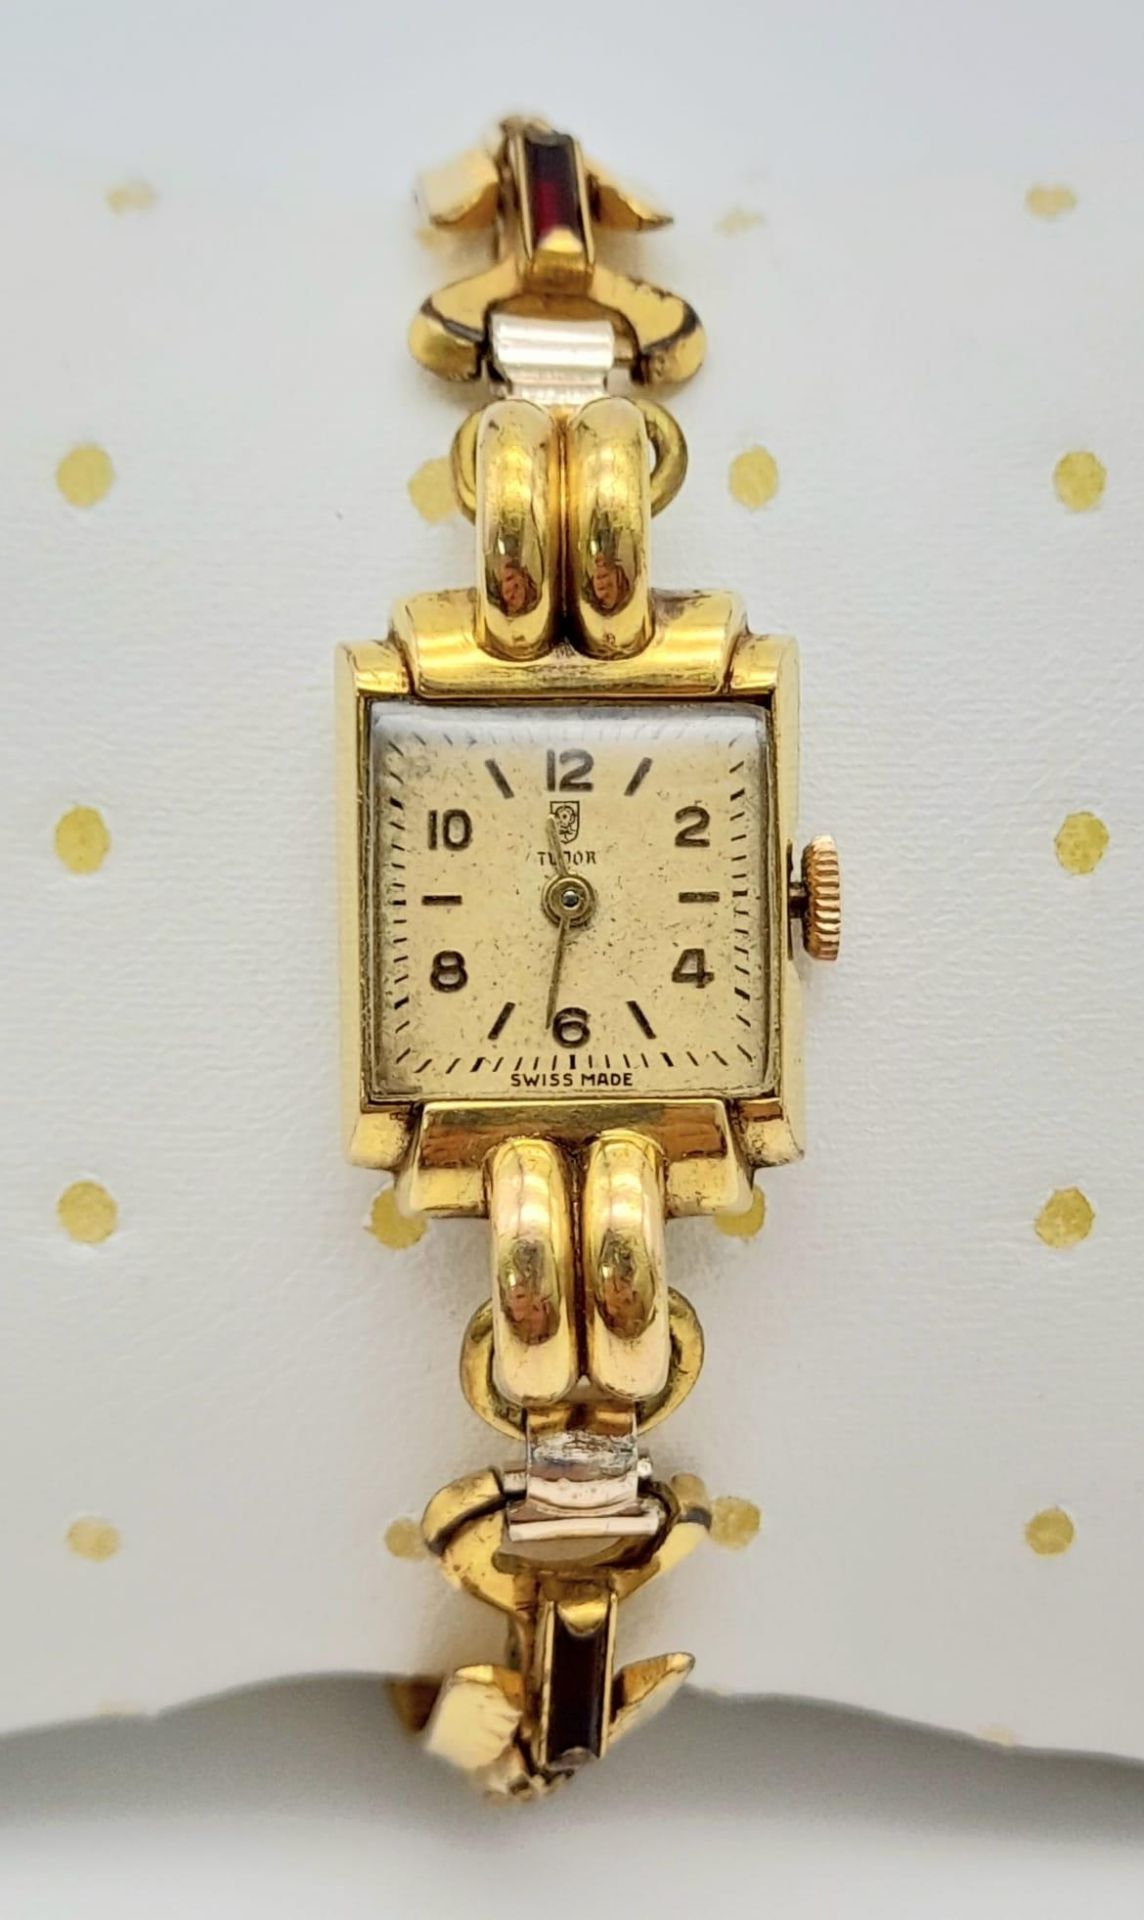 A Vintage Tudor (Rolex) Ladies Watch. Gold plated bracelet. Small rectangular case - 16 x 22mm.